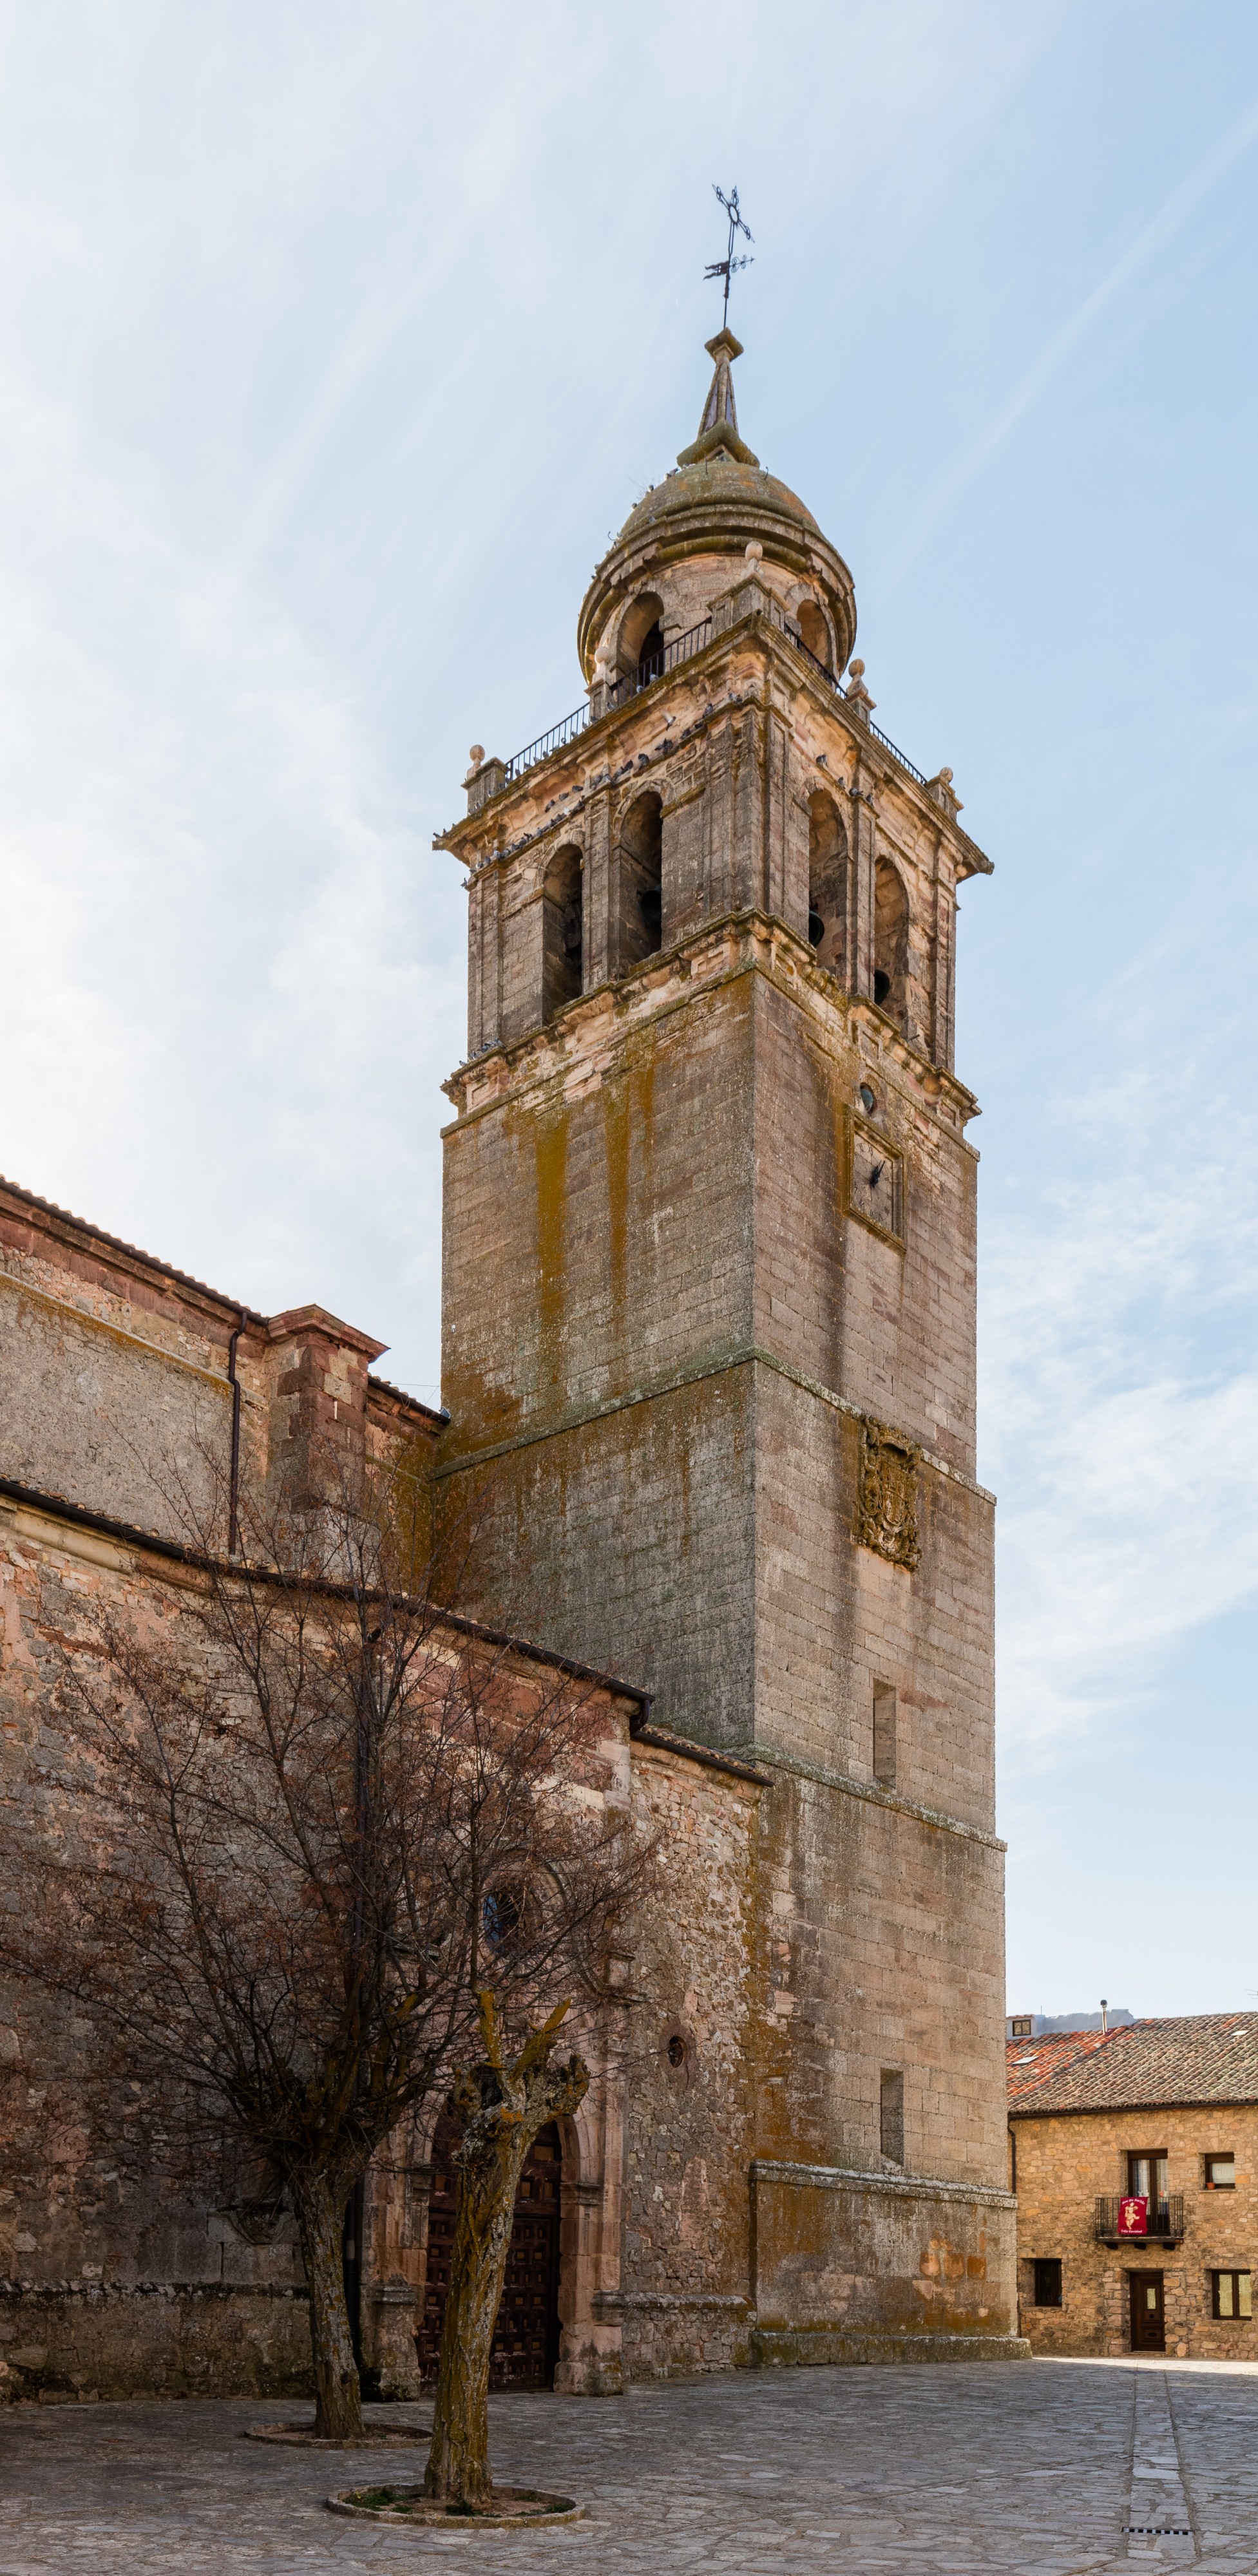 Colegiata, Medinaceli, Soria, España, 2015-12-28, DD 103